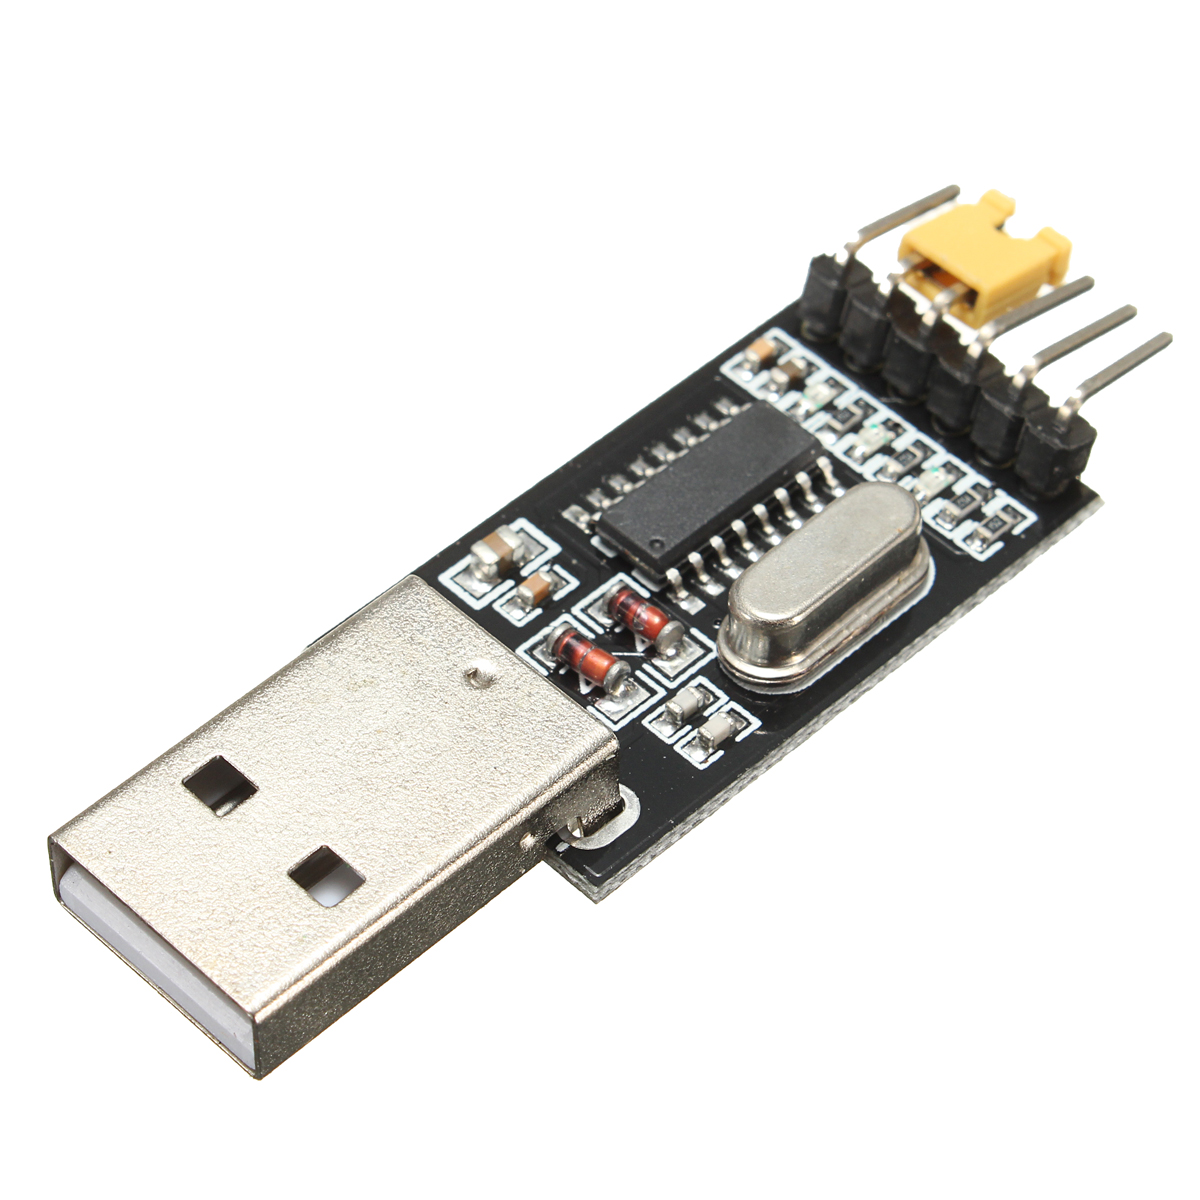 20pcs-33V-5V-USB-to-TTL-Converter-CH340G-UART-Serial-Adapter-Module-STC-1314968